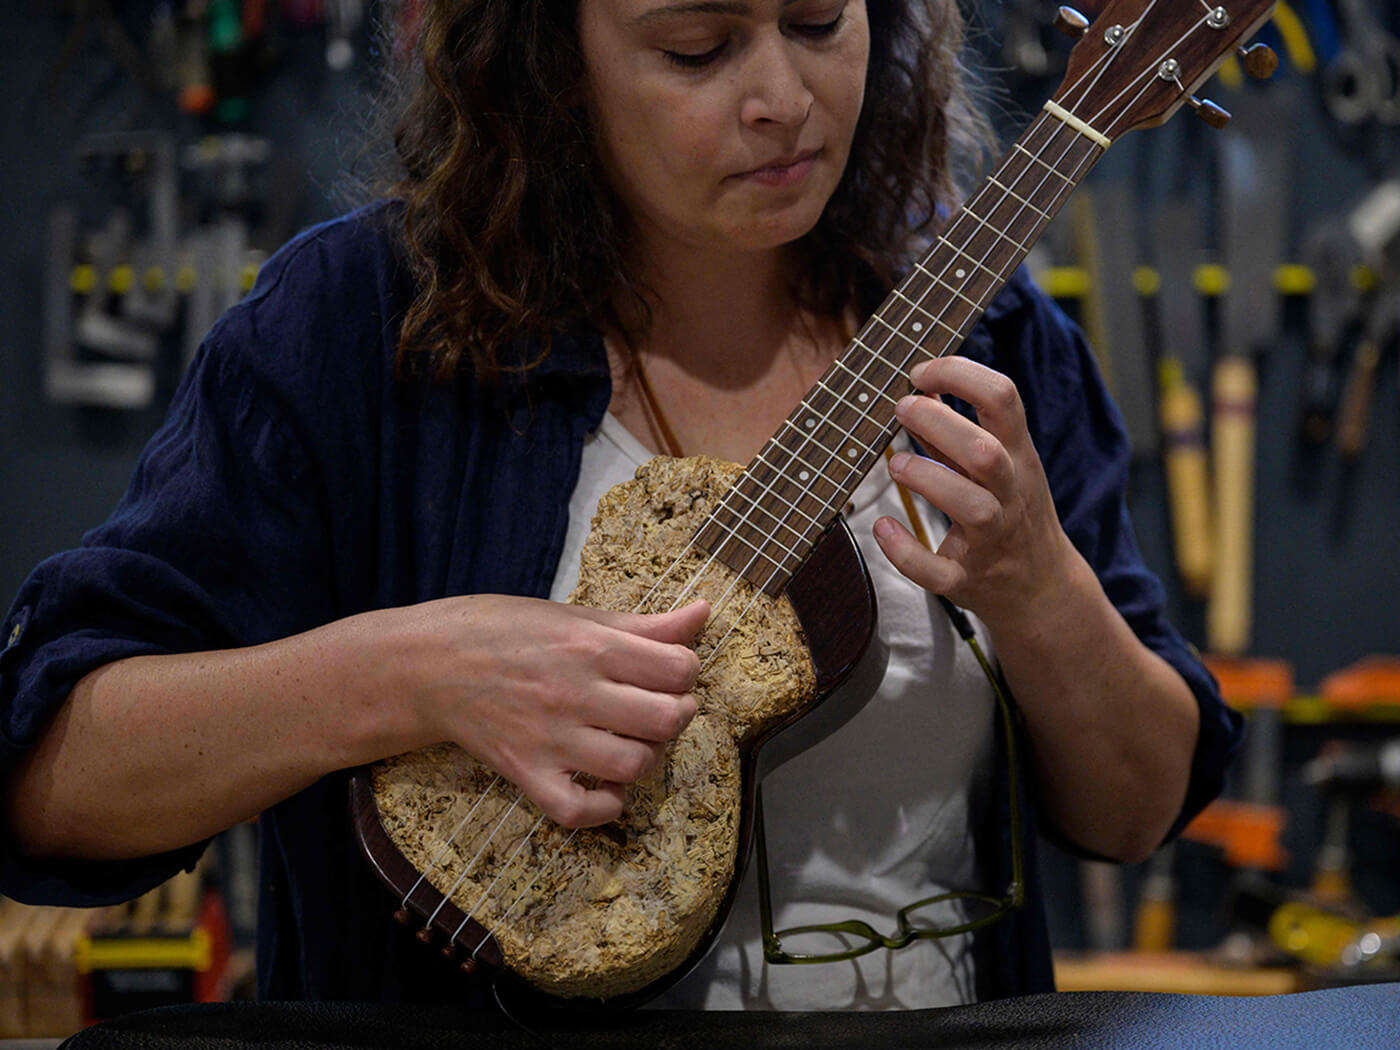 Rachel Rosenkrantz playing a ukelele made using mycelium